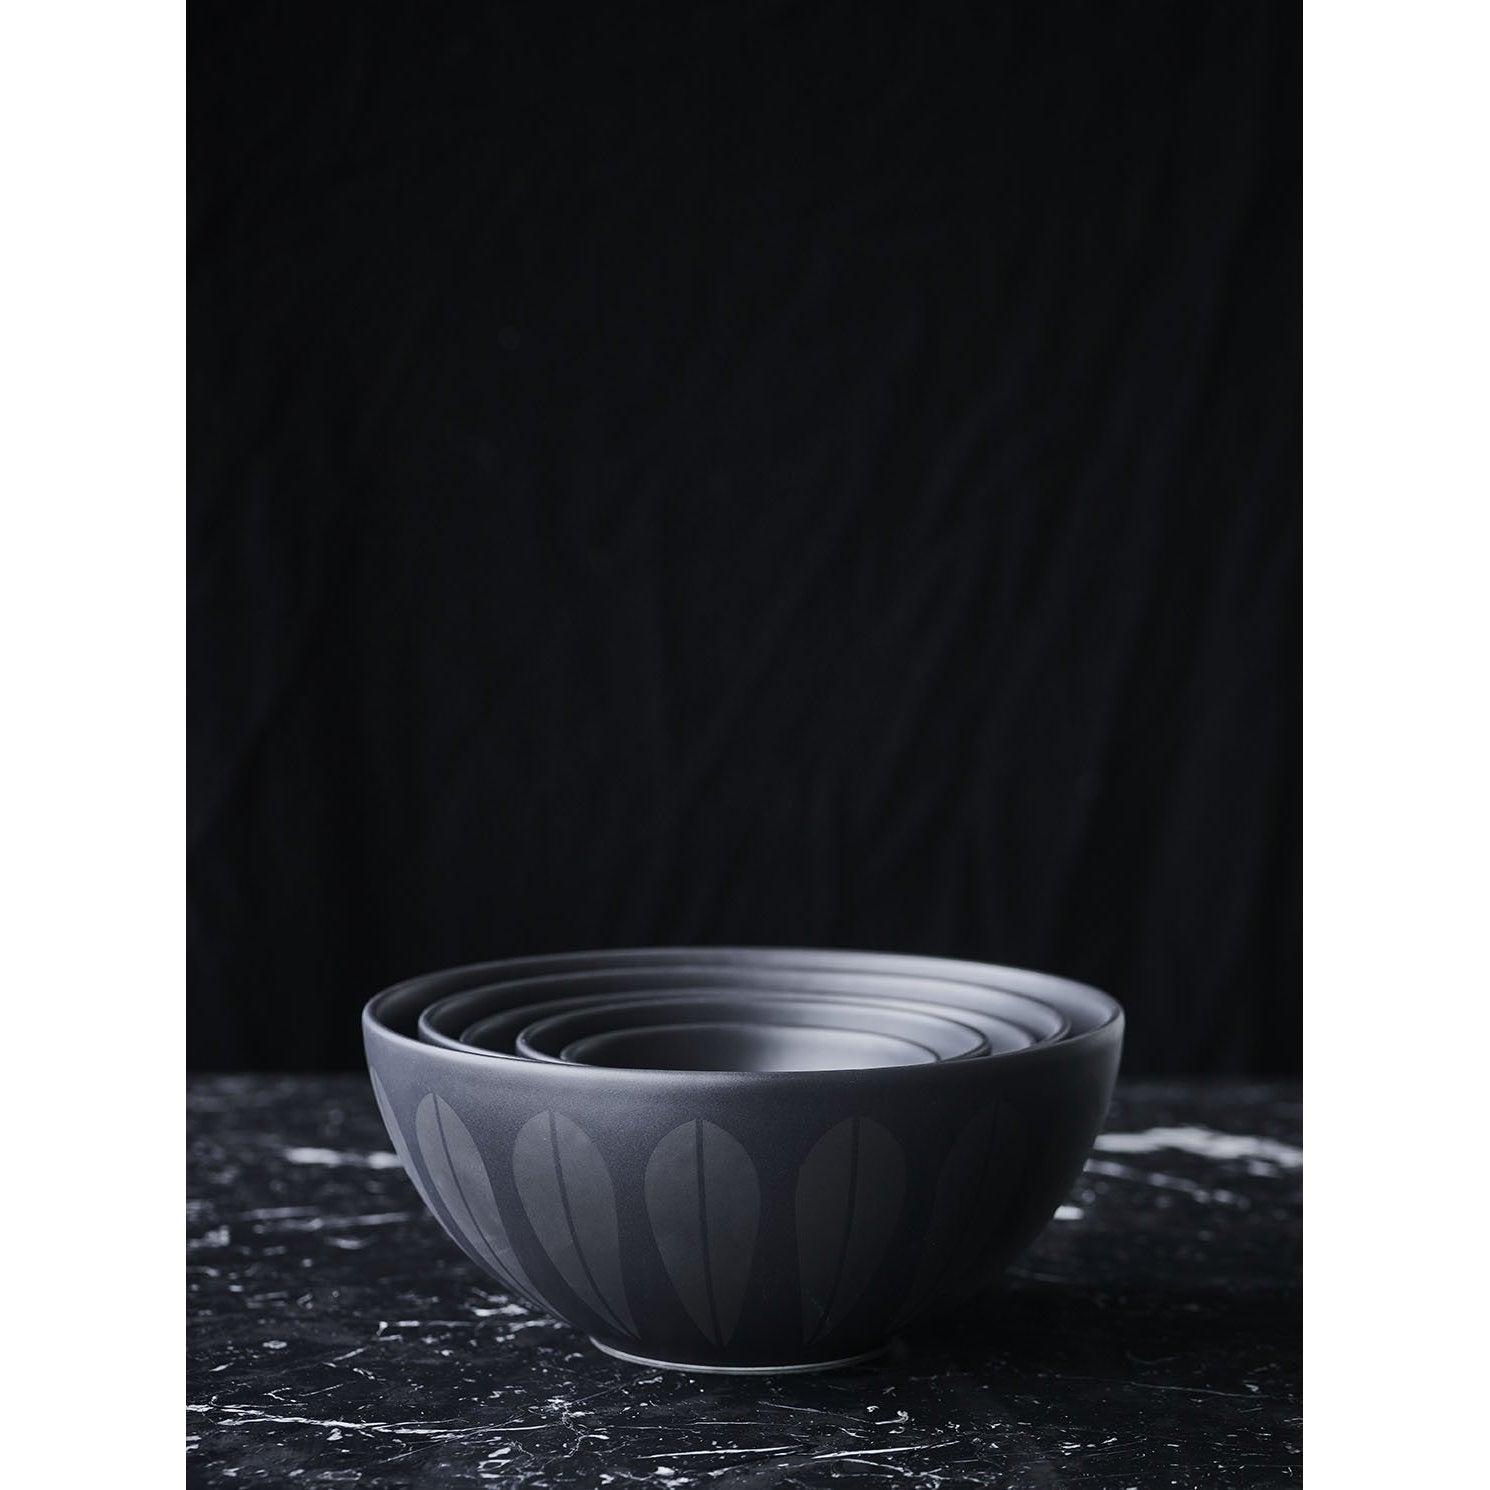 Lucie Kaas Arne Clausen Bowl Black，24厘米